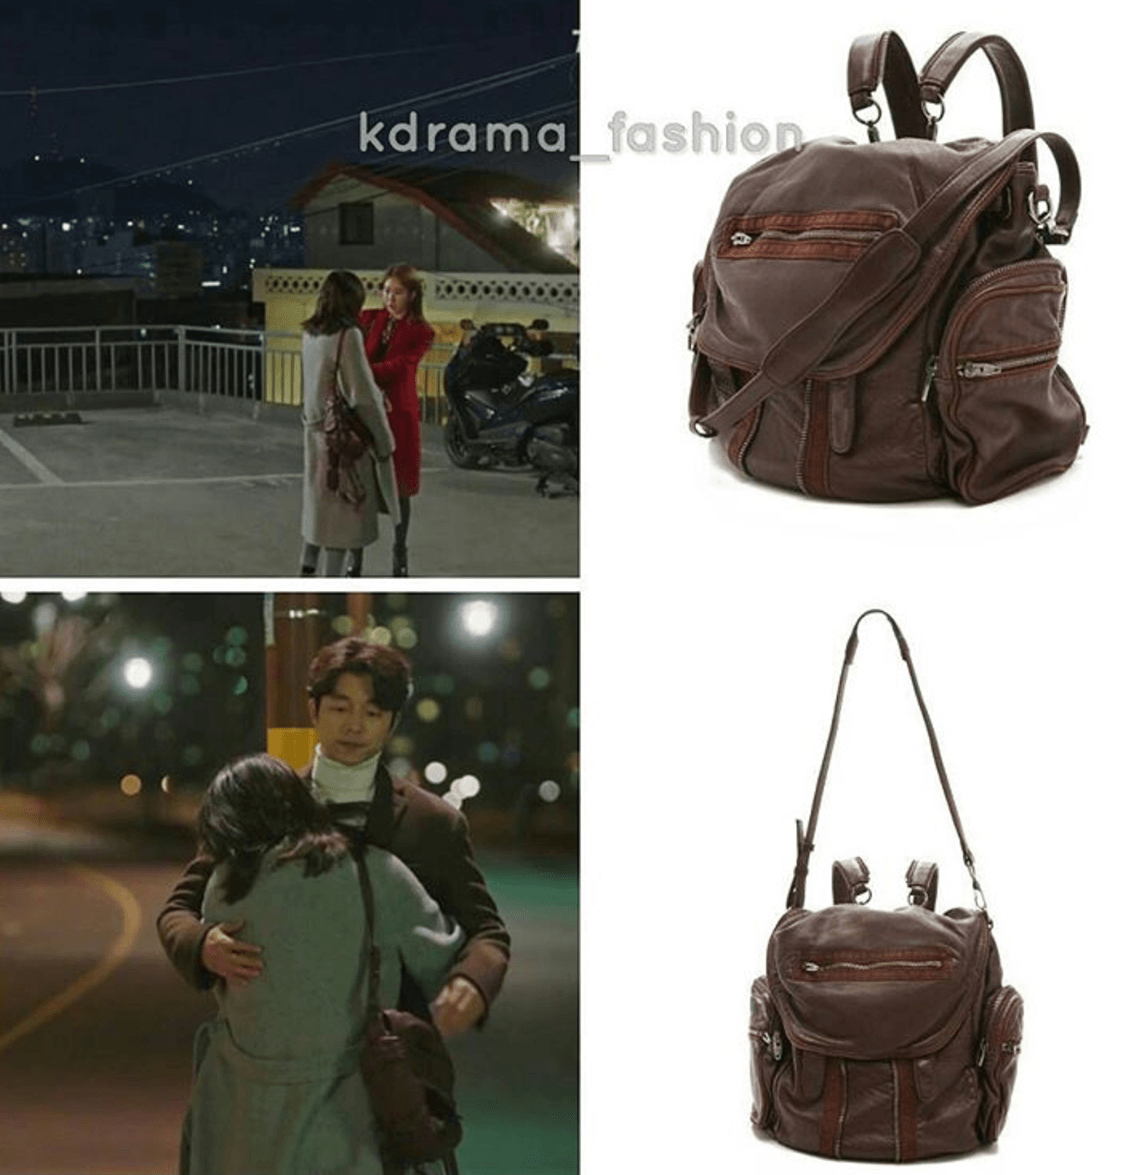 Qoo10 - Goblin Drama Bag : Bag/Wallets